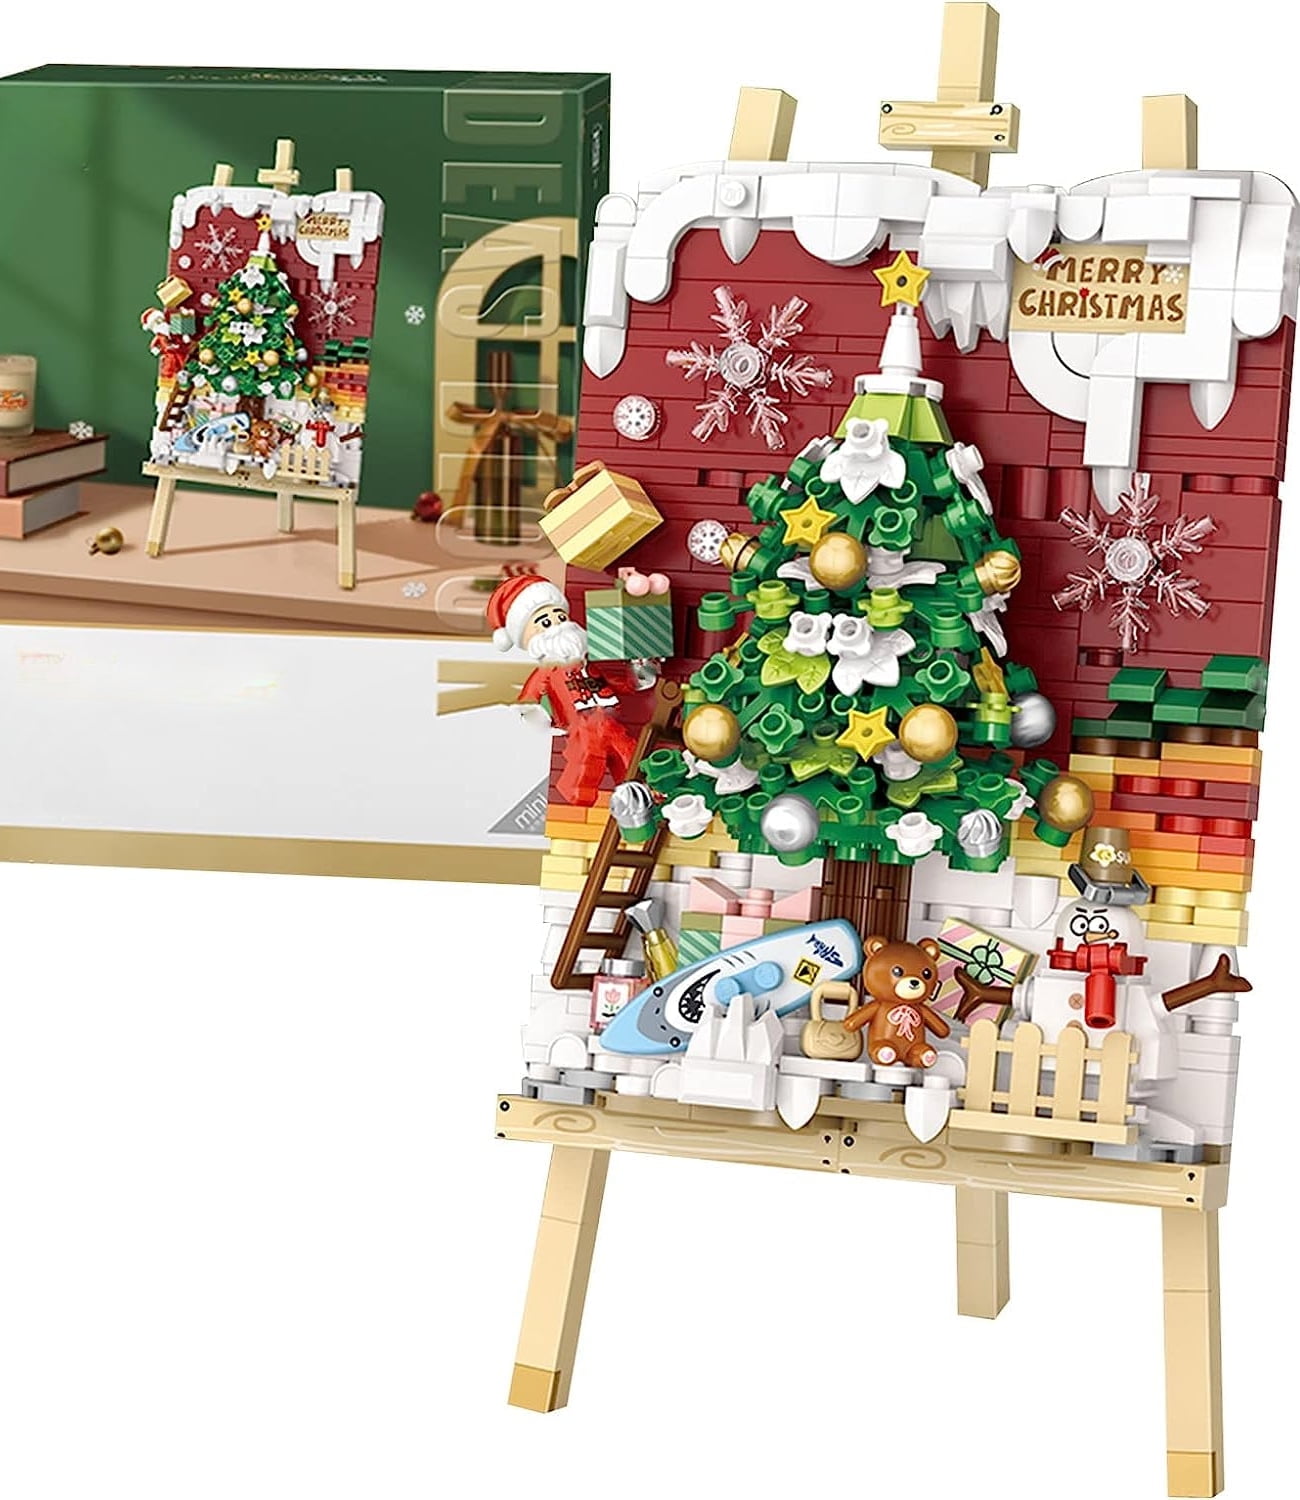 LEGO Christmas Tree Mini Set #30286 [Bagged]